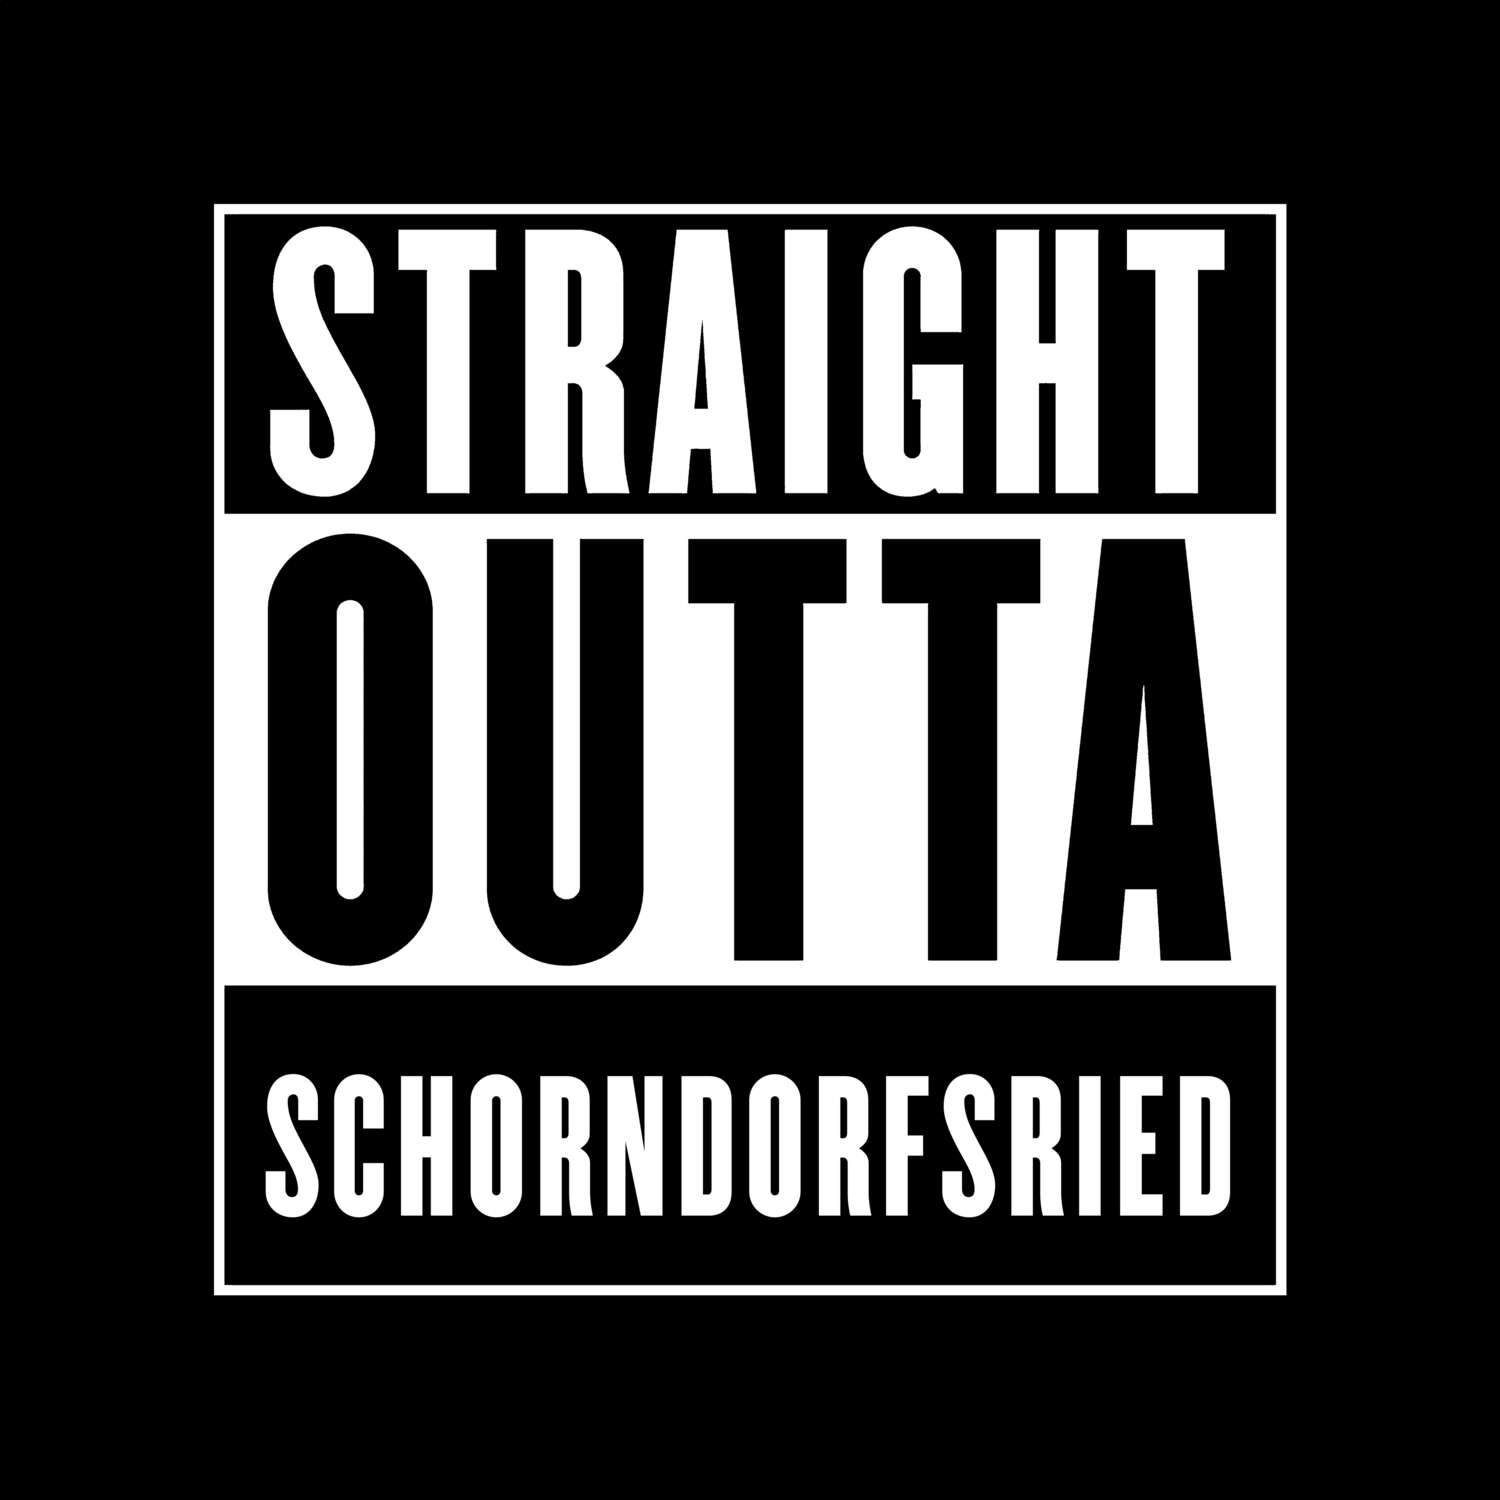 Schorndorfsried T-Shirt »Straight Outta«